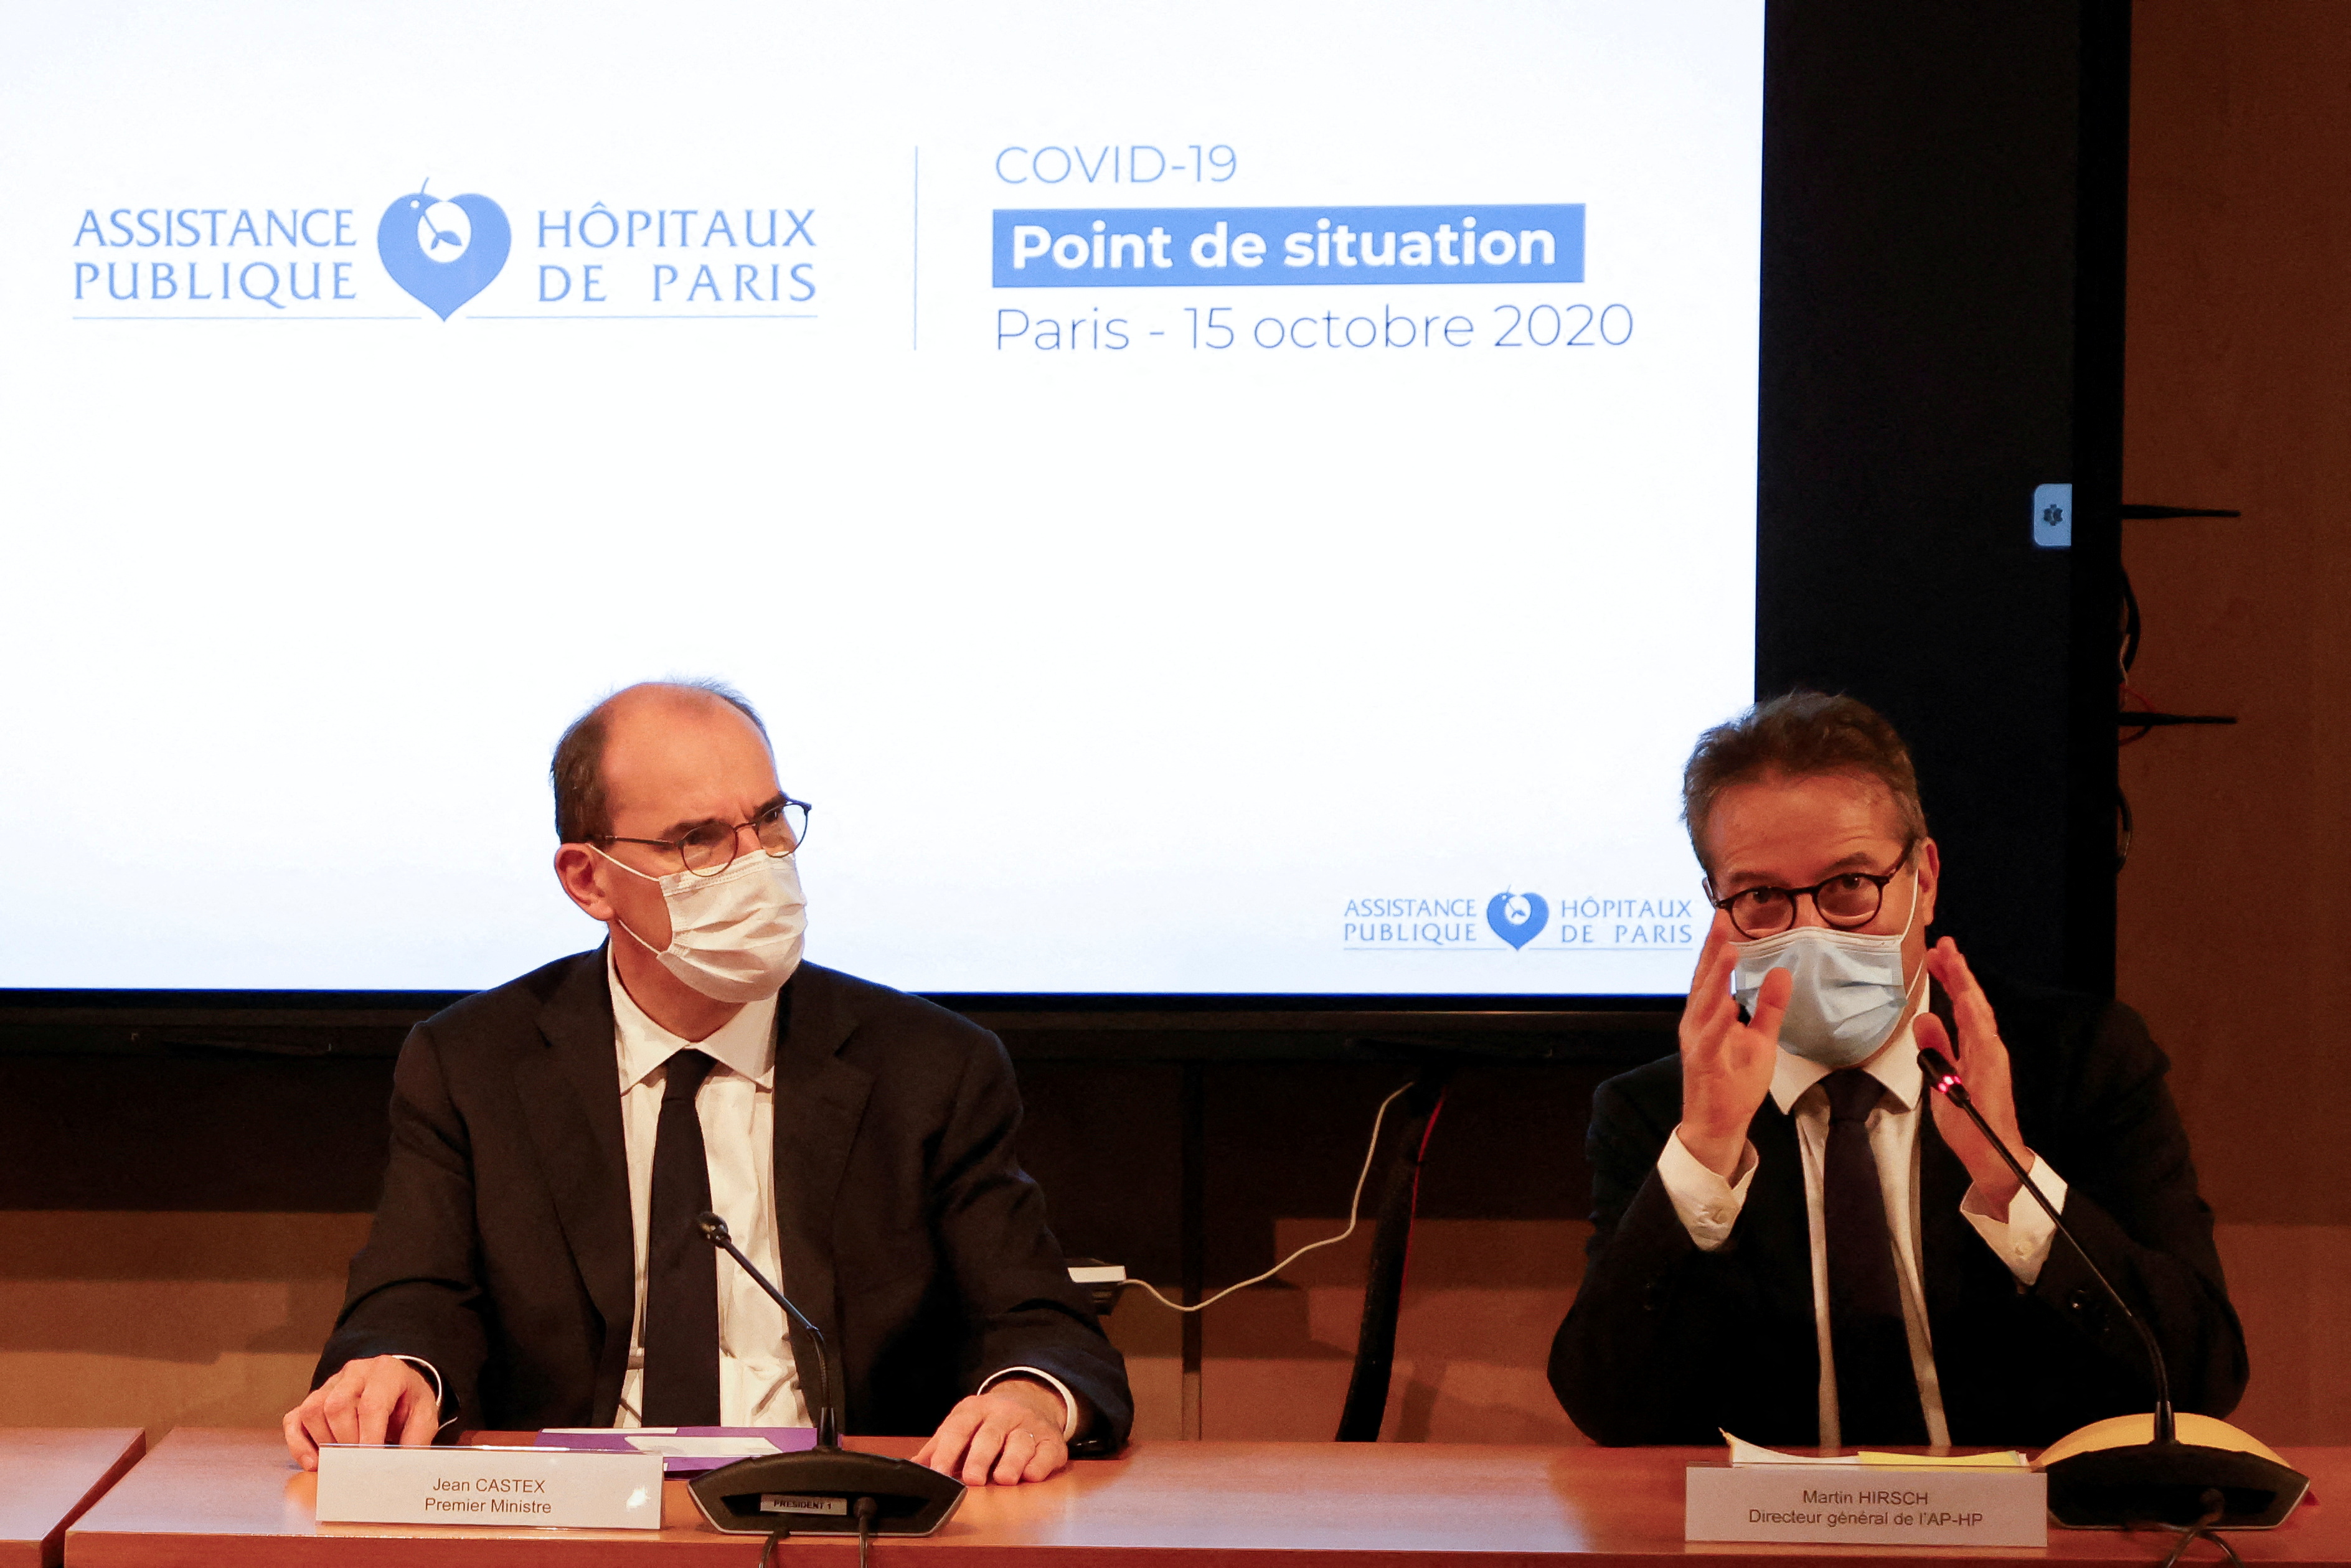 The outbreak of the coronavirus disease (COVID-19) in France